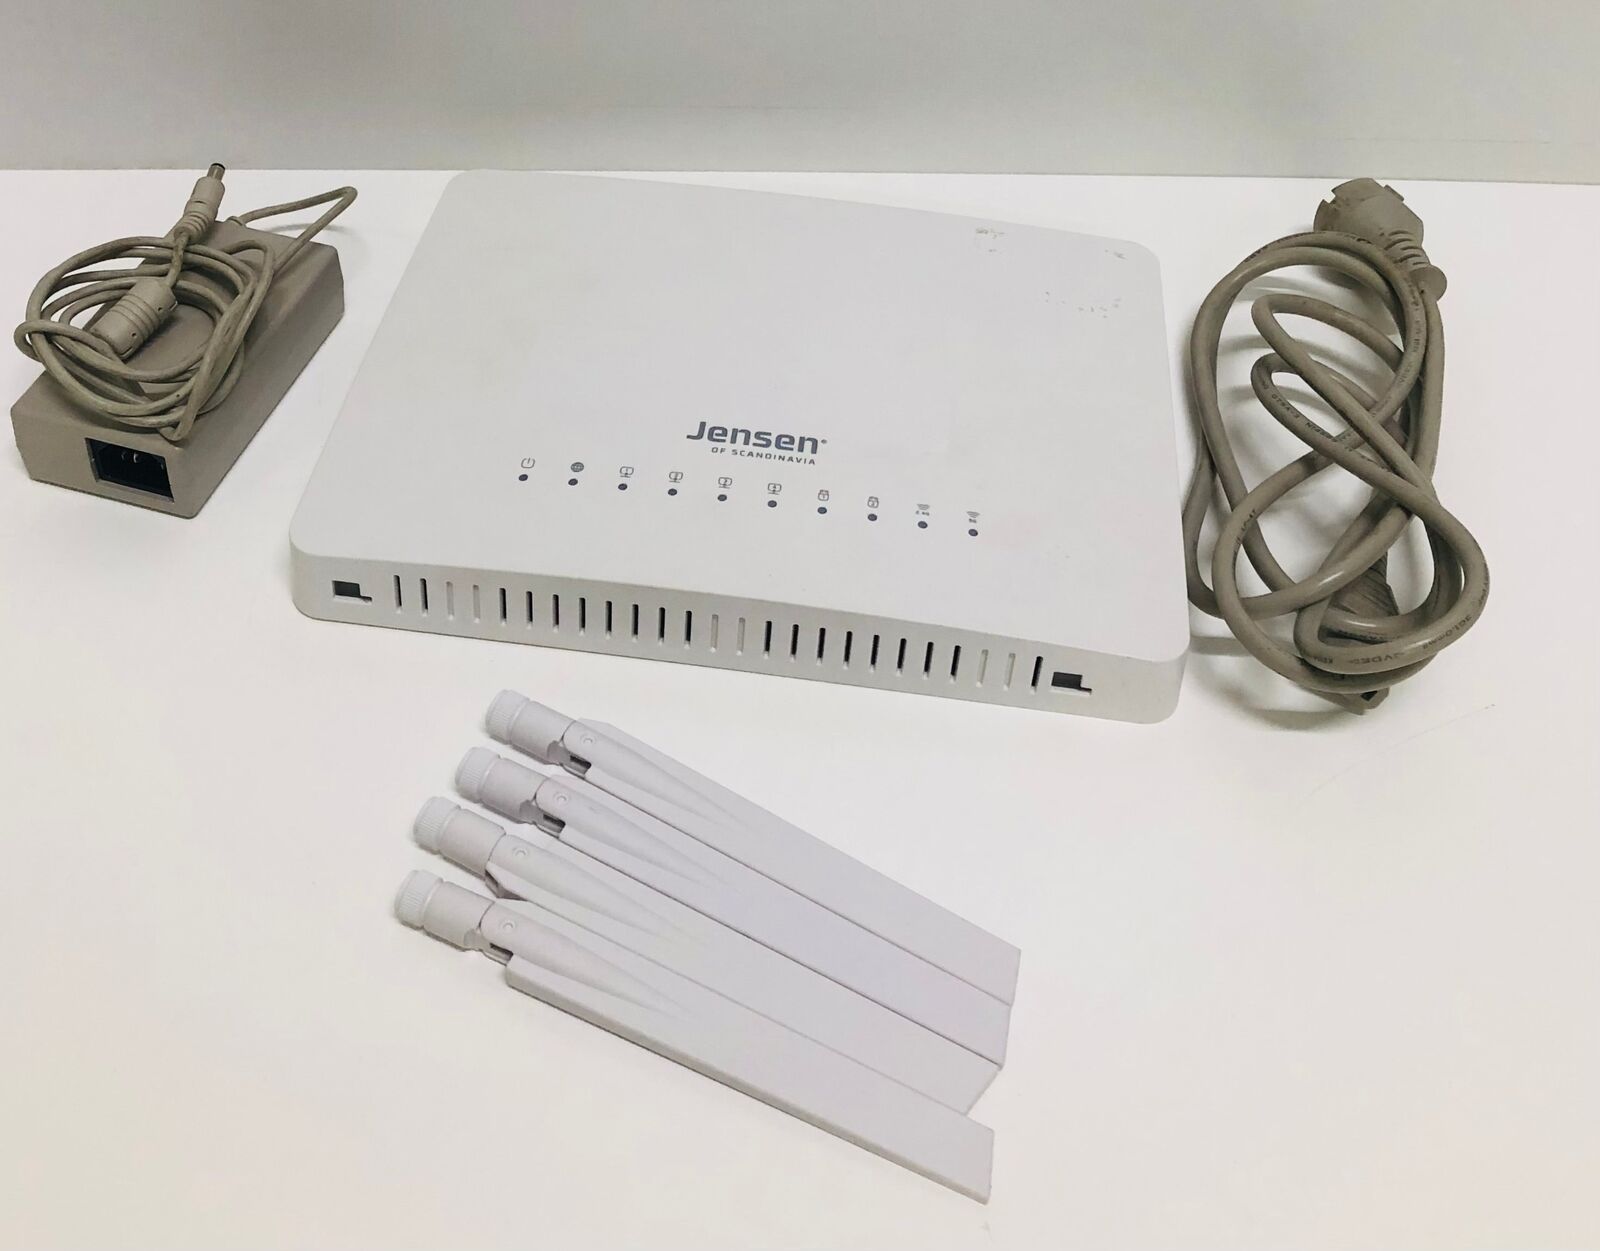 Jensen LYNX 9000 router